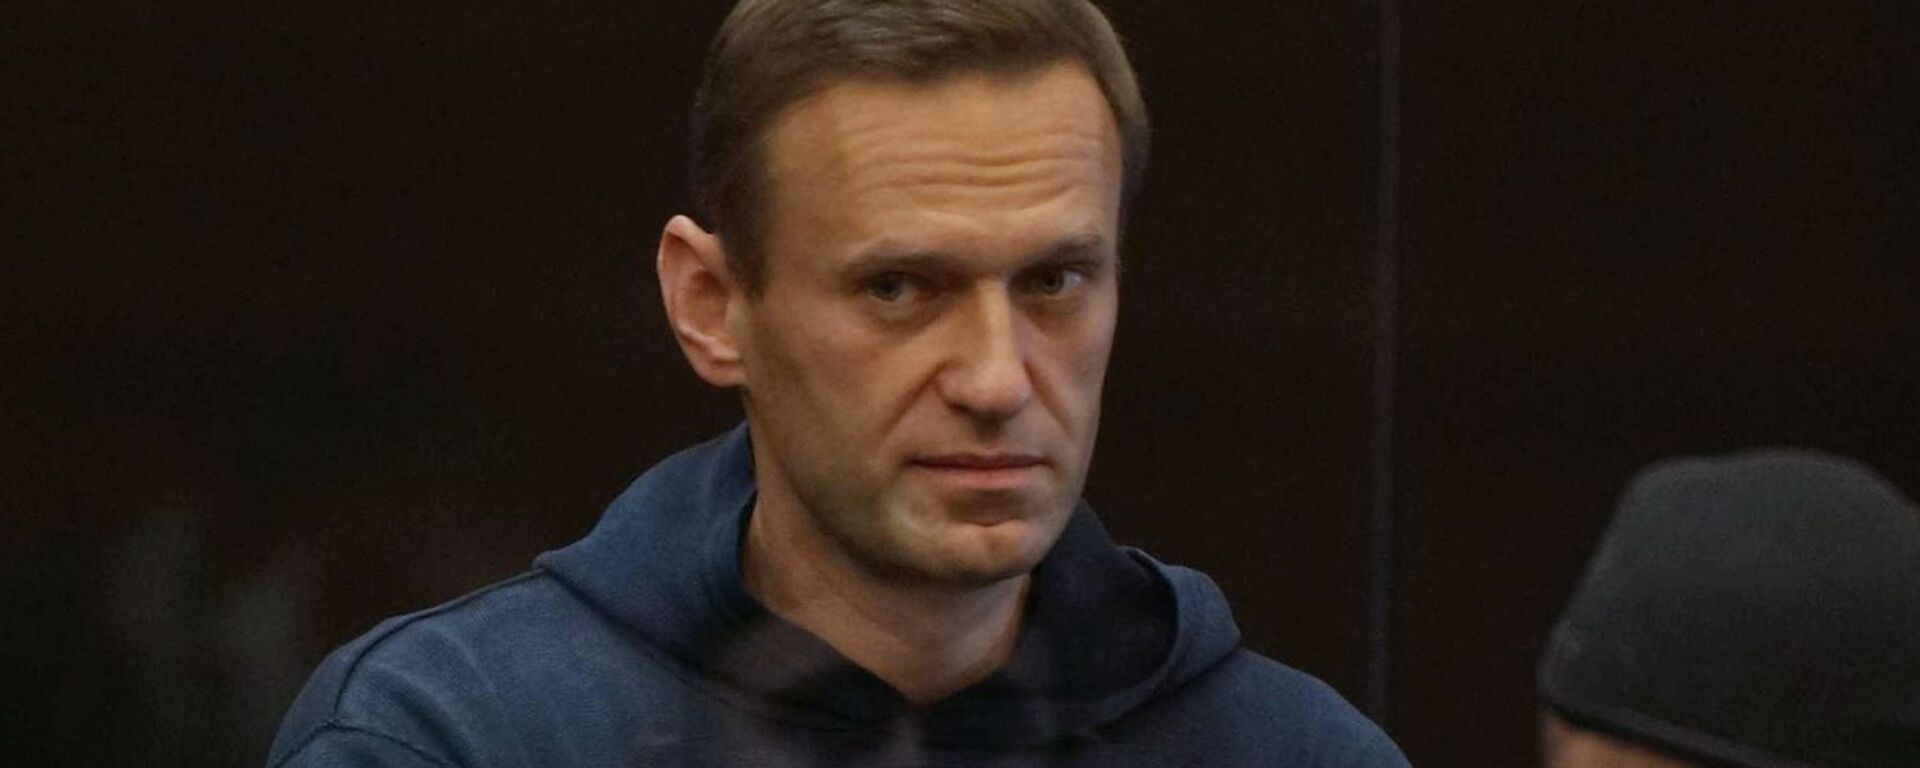 Alexéi Navalni, opositor ruso - Sputnik Mundo, 1920, 08.02.2021